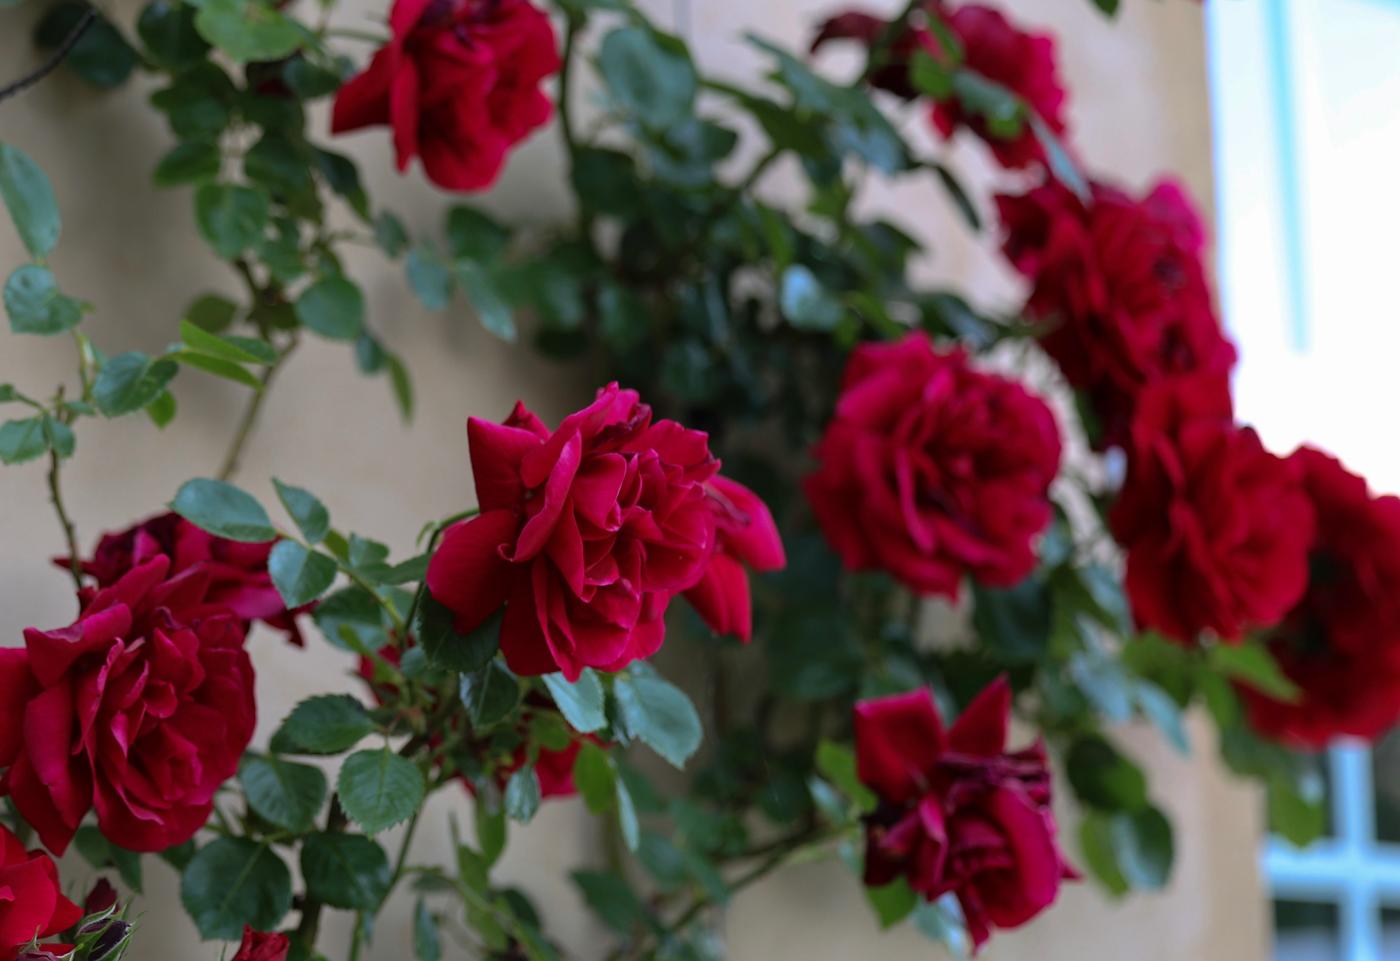 Red roses outside